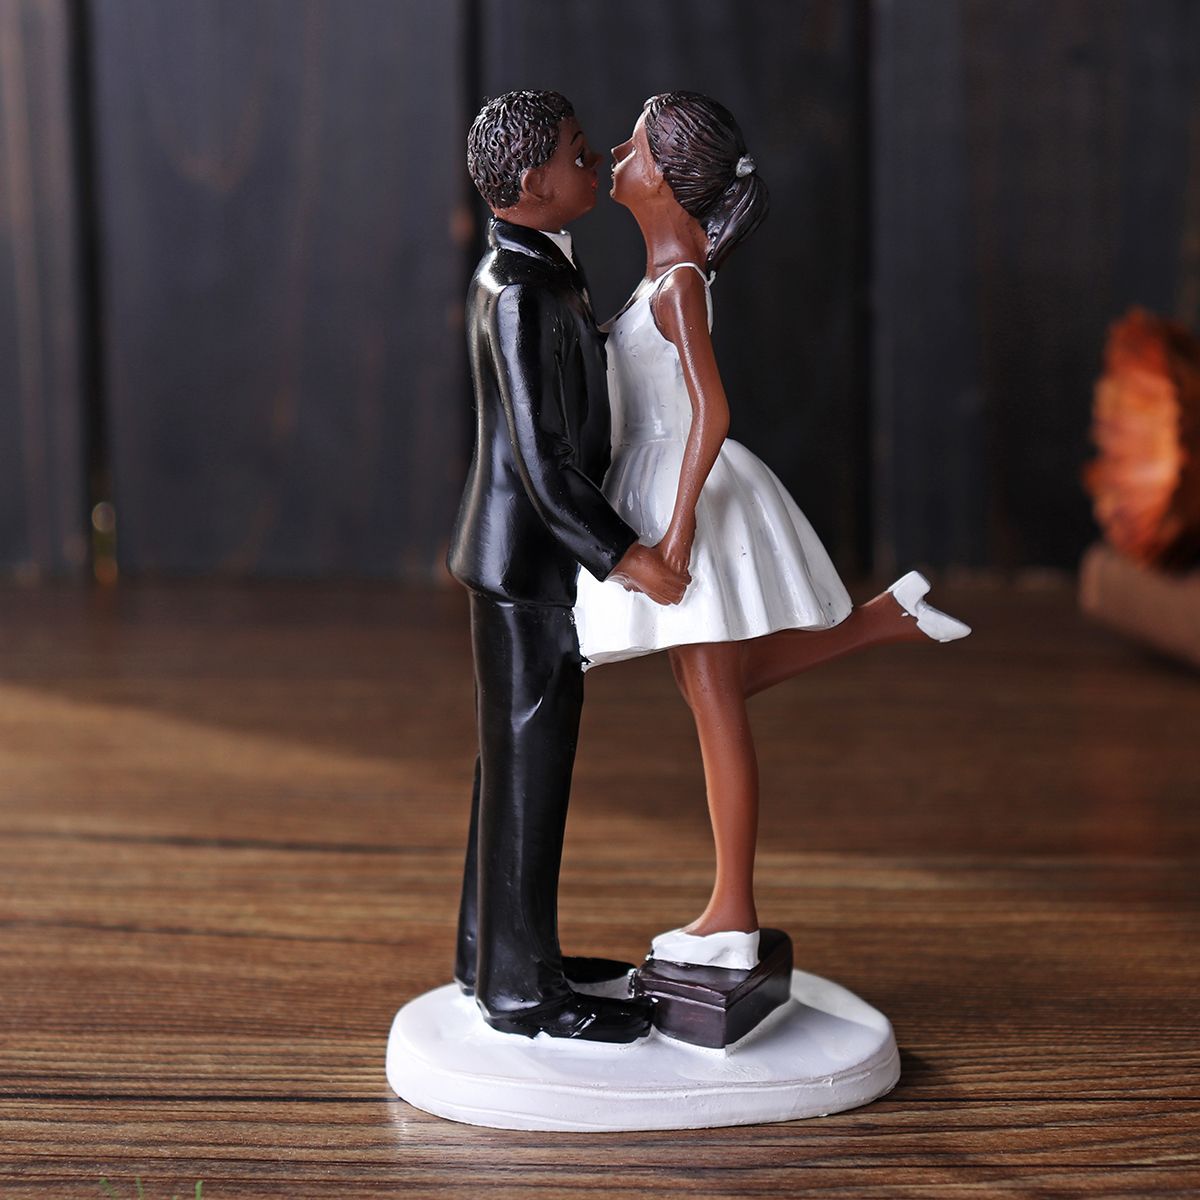 Romantic-Funny-Wedding-Cake-Topper-Figure-Bride-Groom-Couple-Bridal-Decorations-1421525